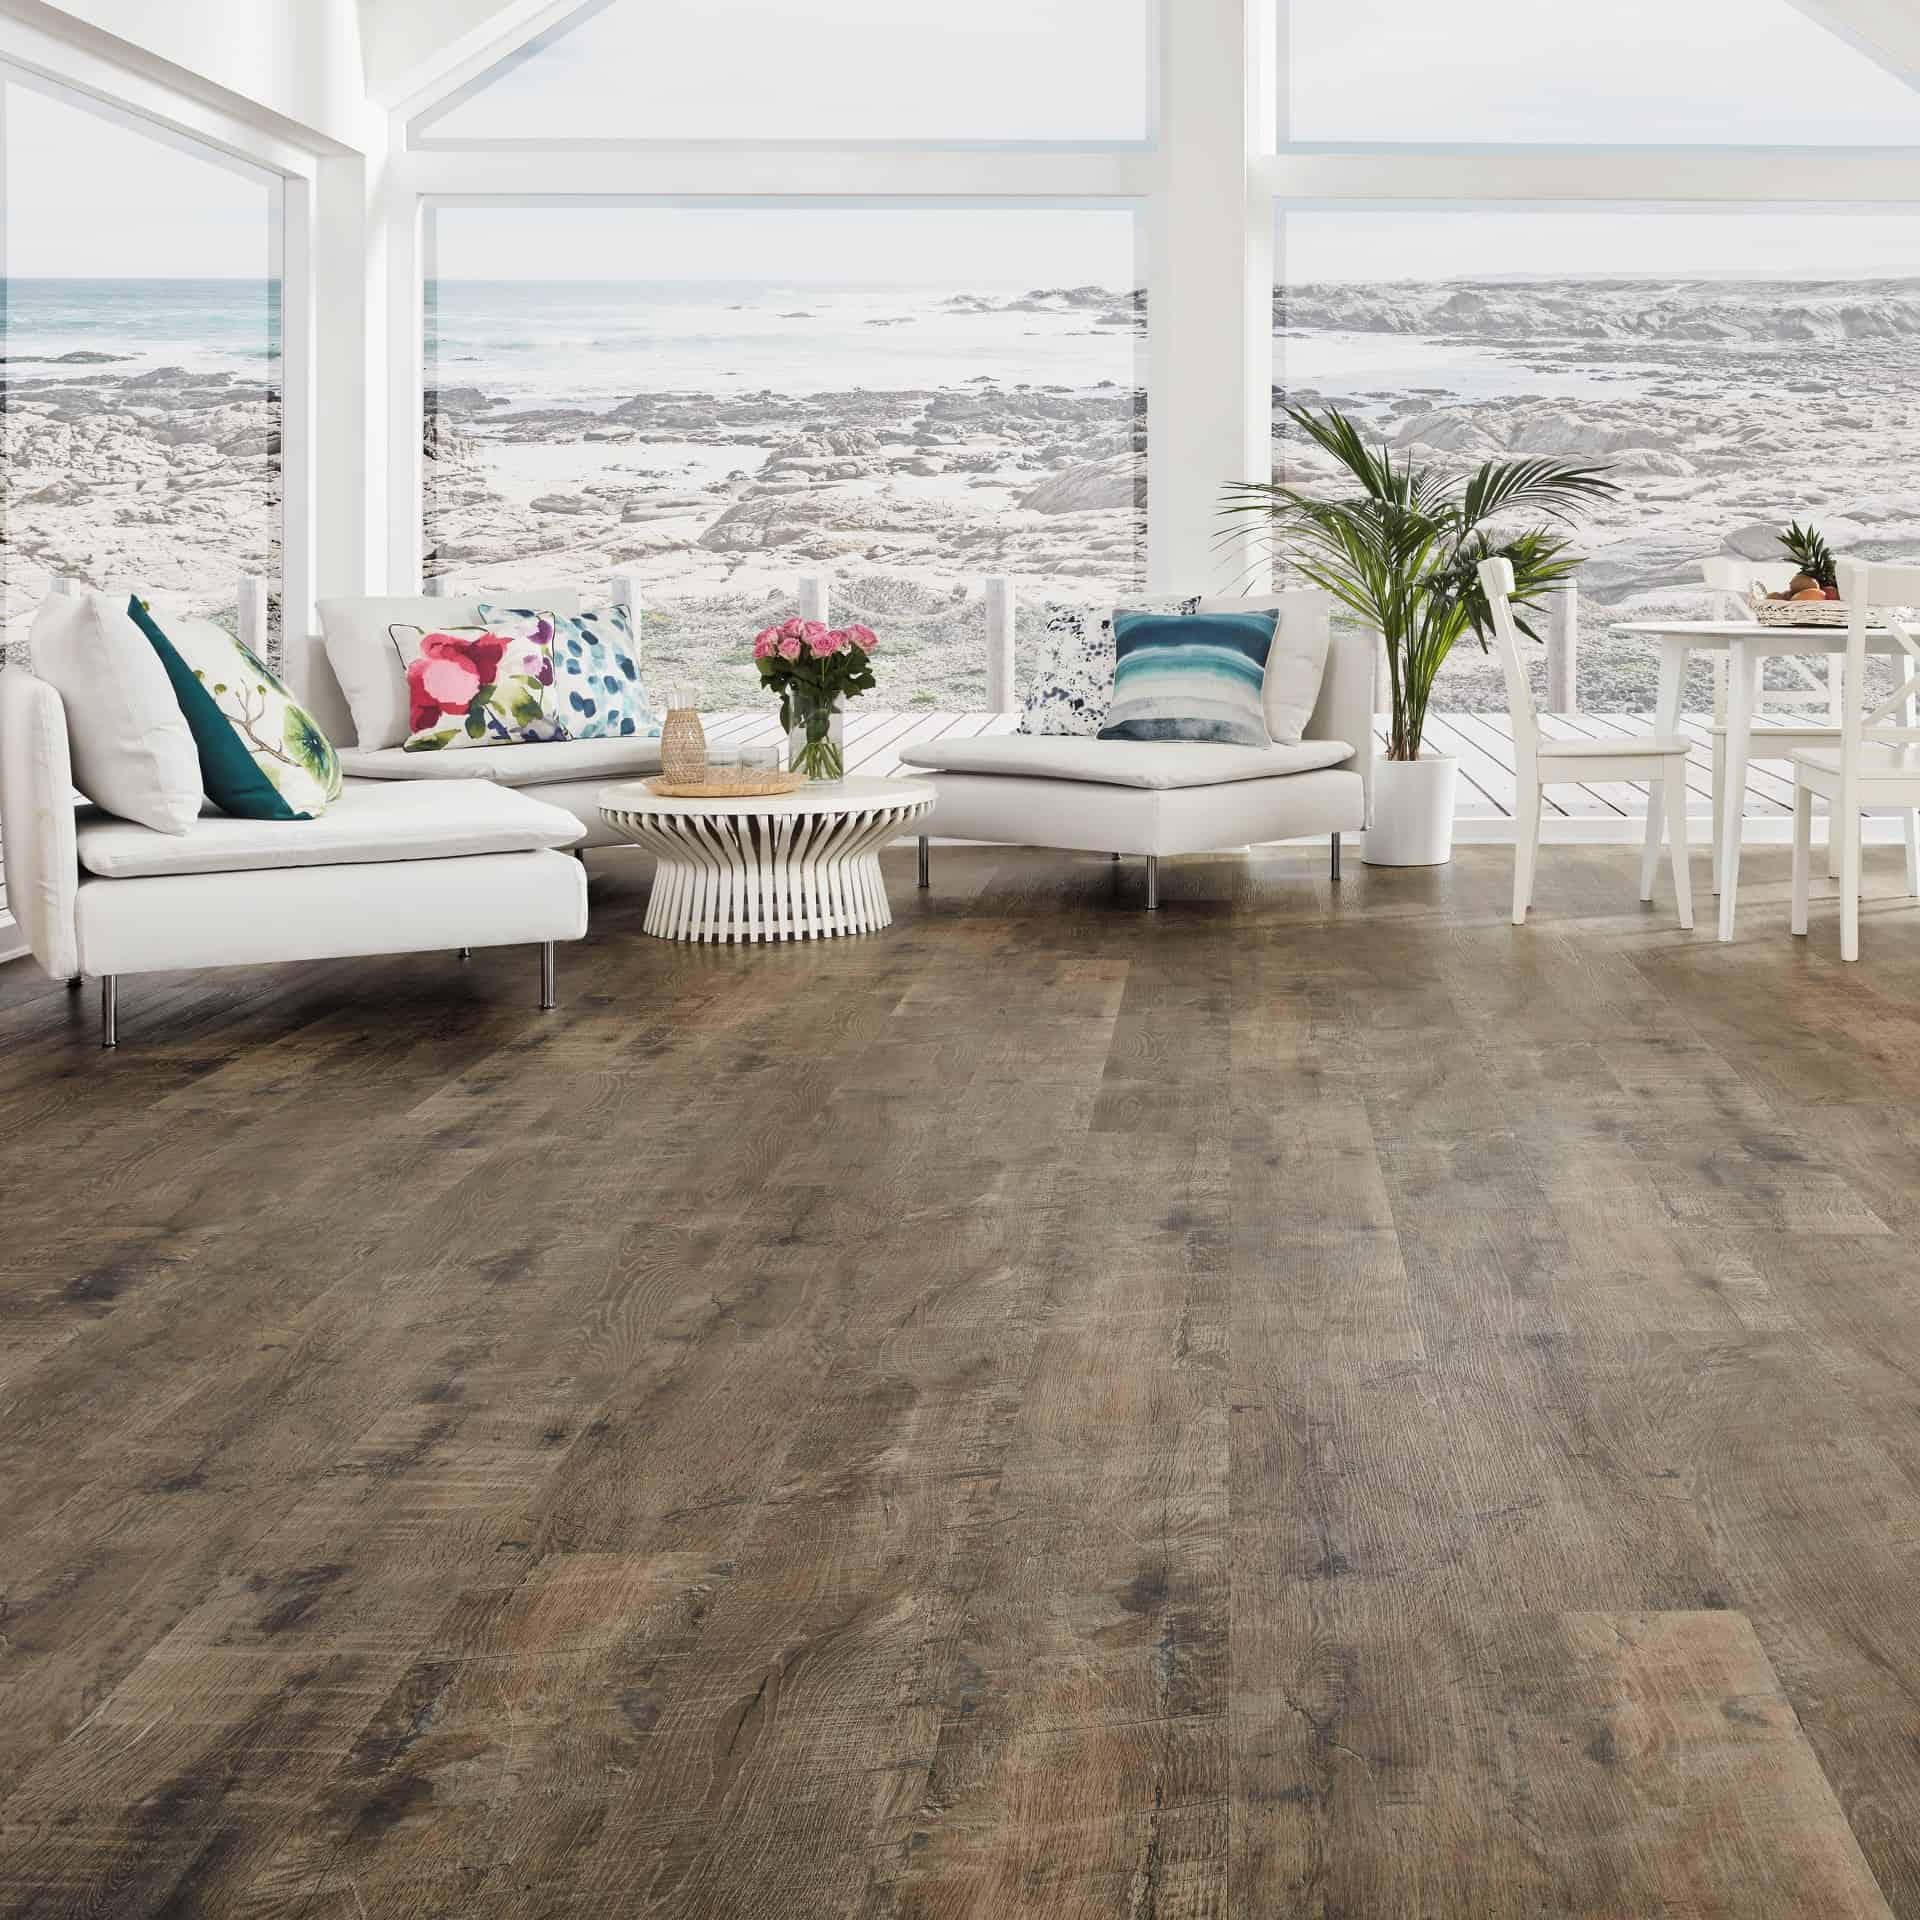 Reclaimed French Oak Luxury VInyl Flooring in sunroom